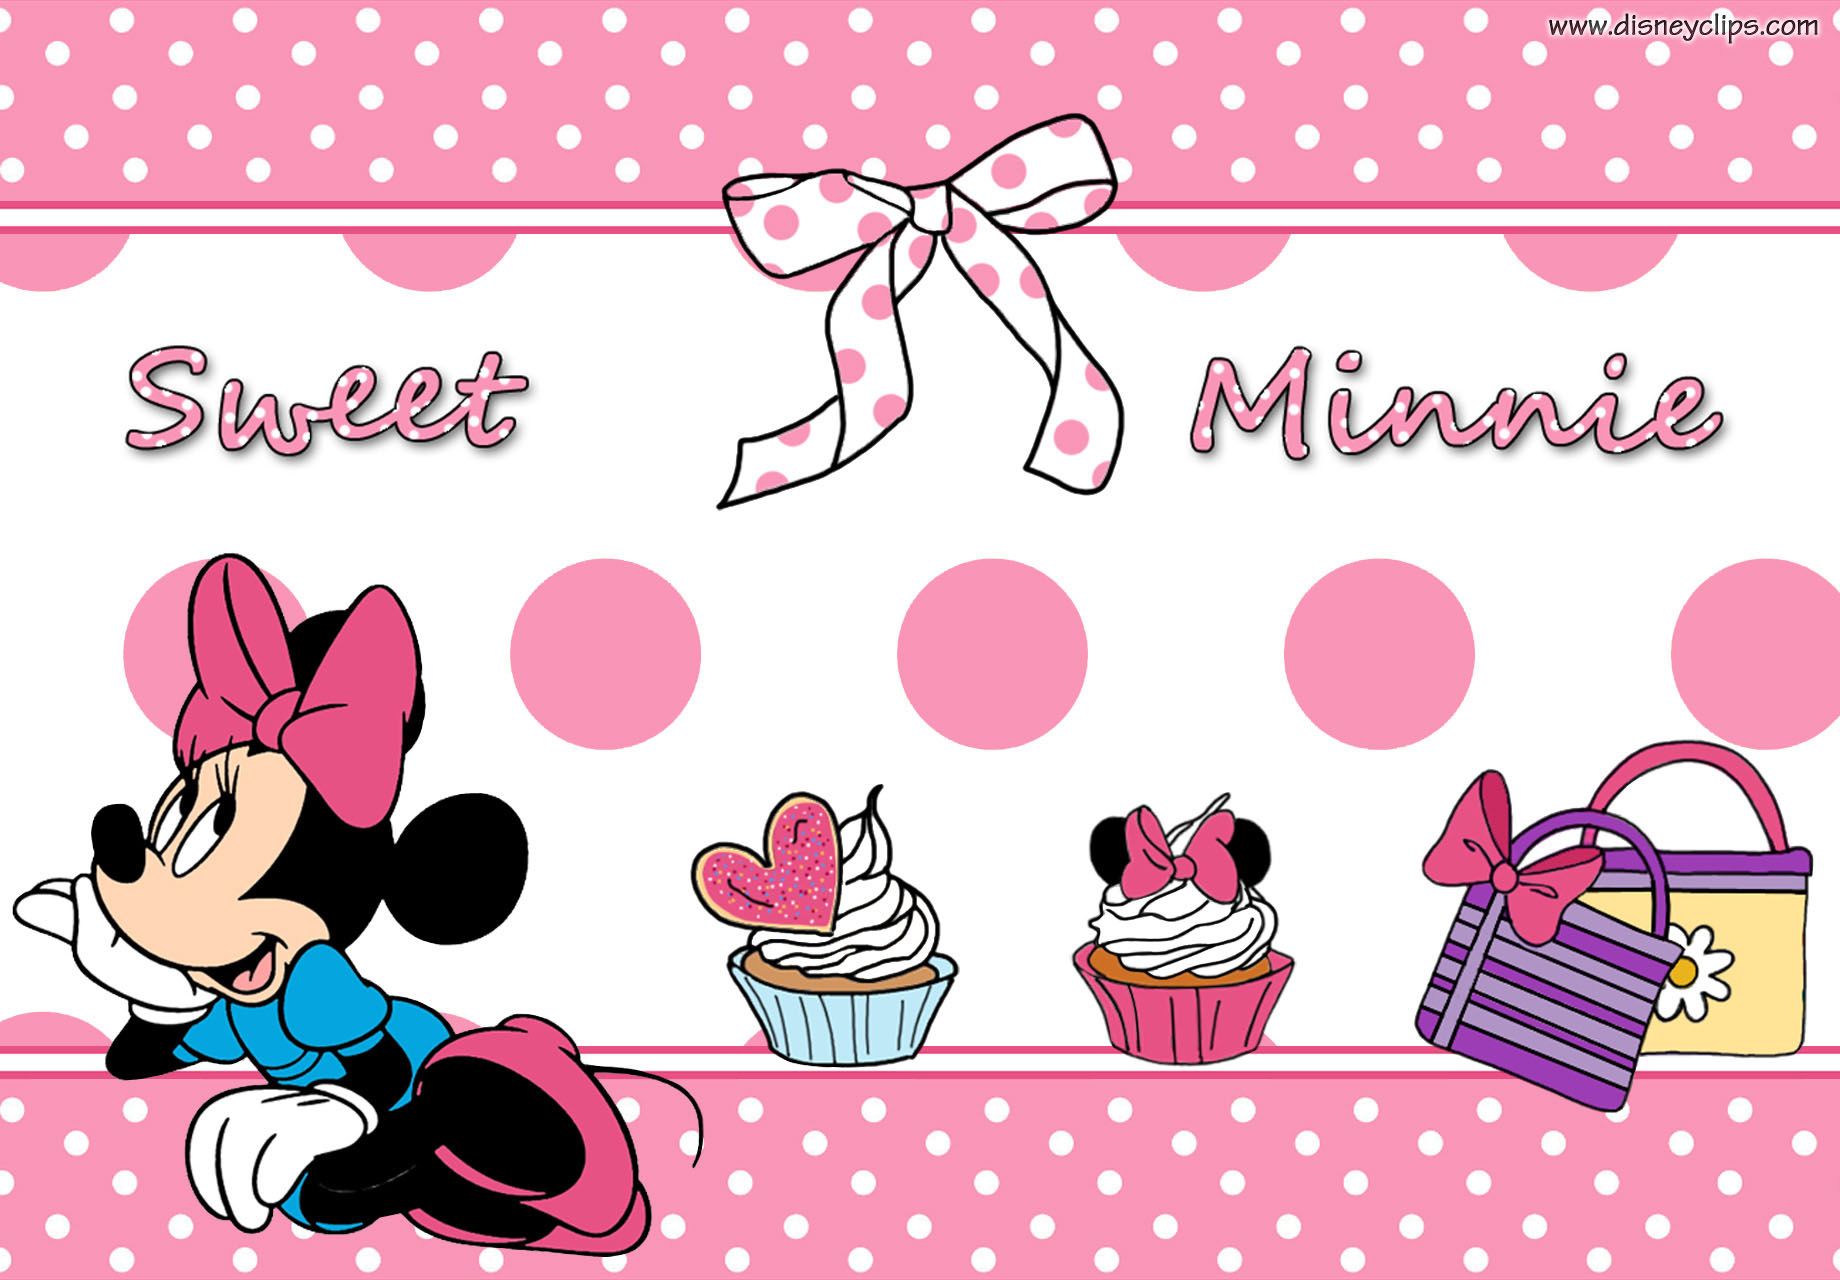 Disney Minnie Mouse Wallpaper | Disney's World of Wonders